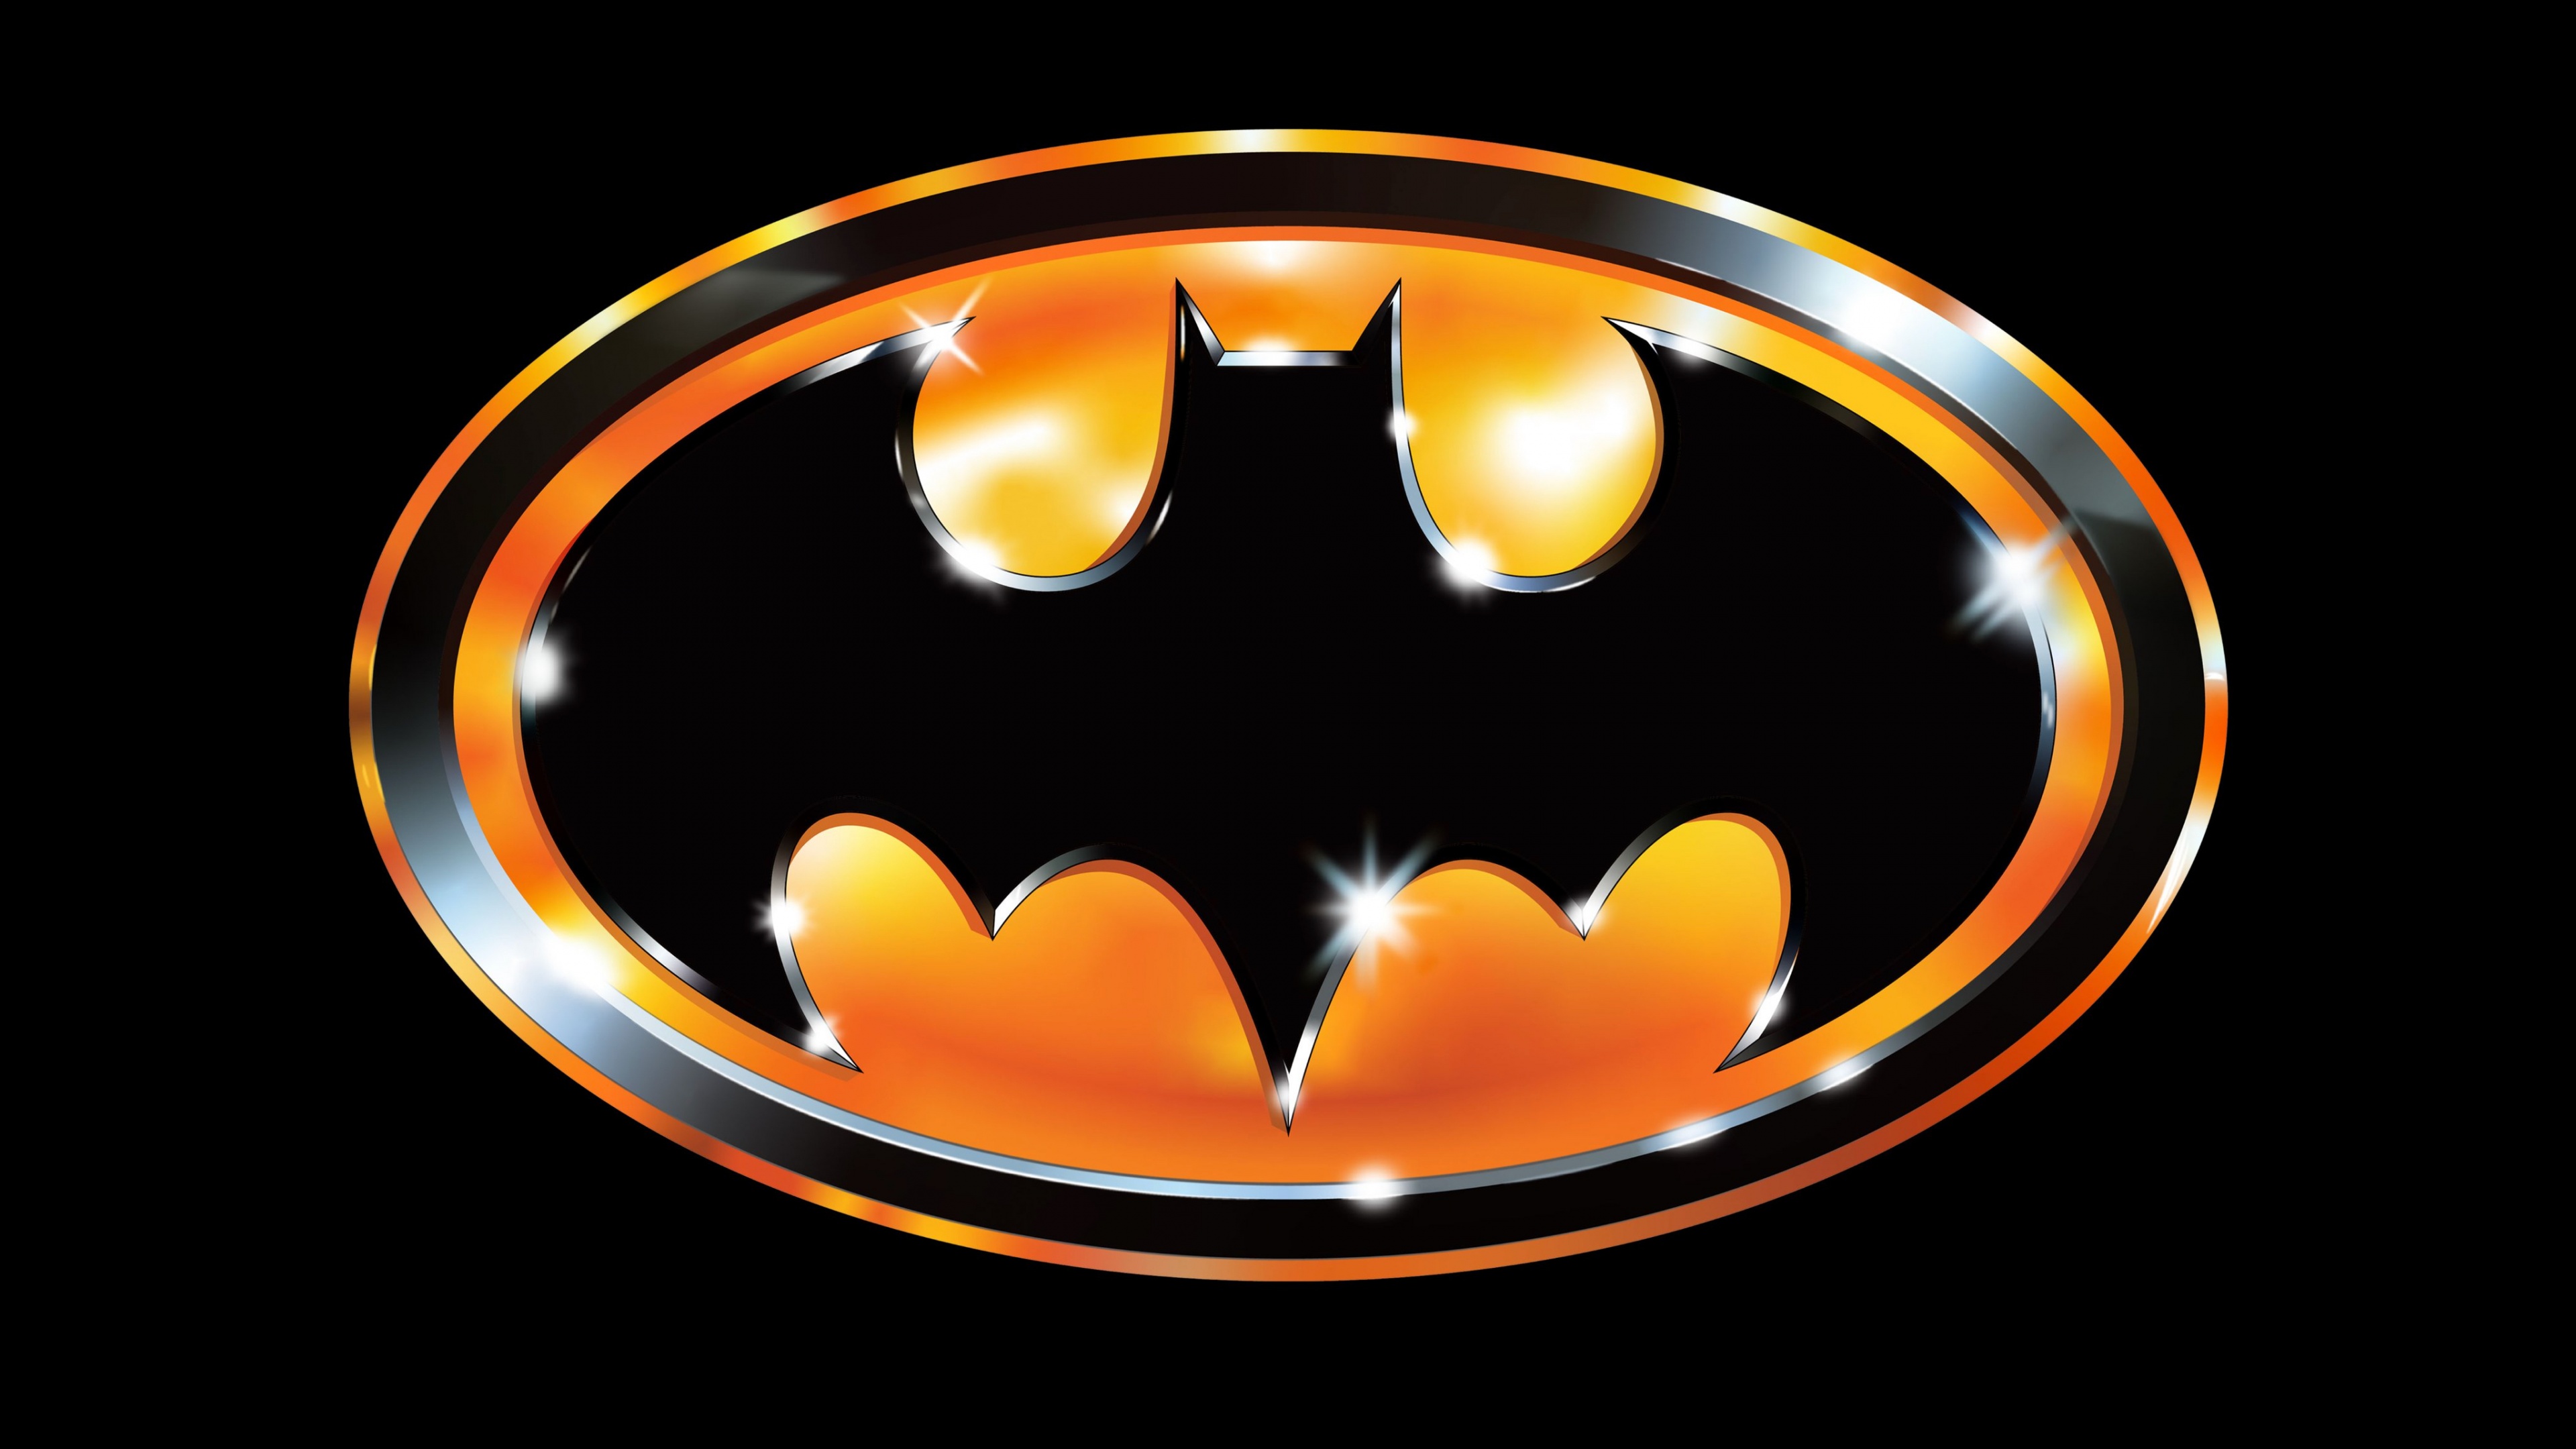 Batman Gotham City Dc Comics 4k HD Superheroes 4k Wallpapers Images  Backgrounds Photos and Pictures